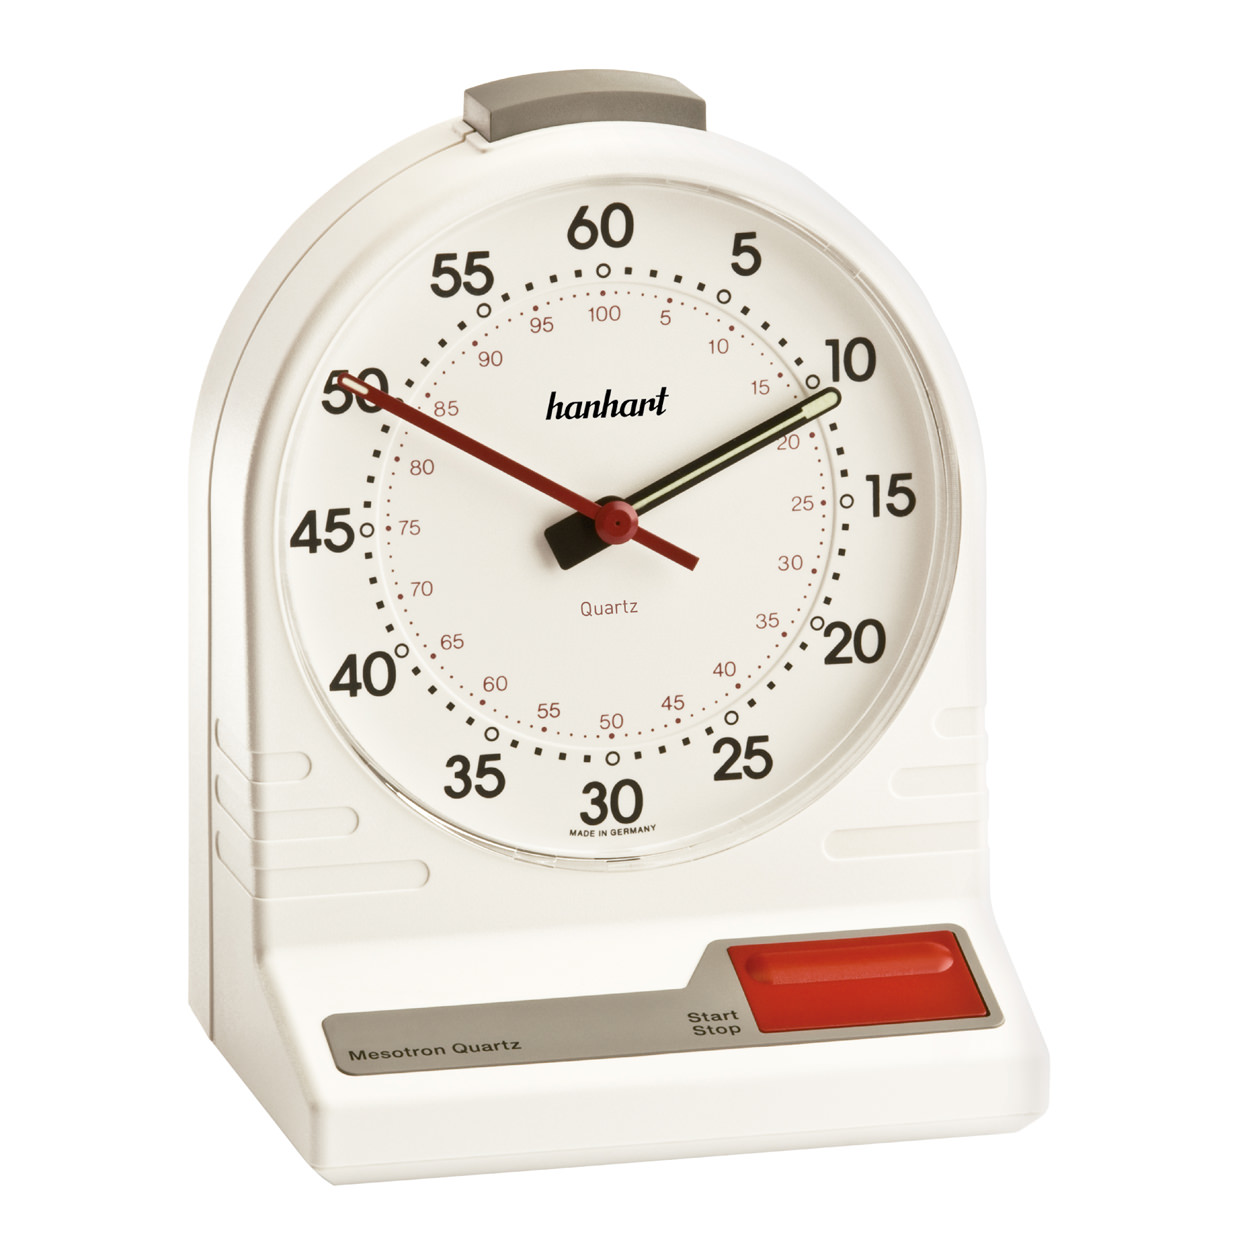 Tafelstopwatch Mesotron 0-60 sec. + 1/100 min.